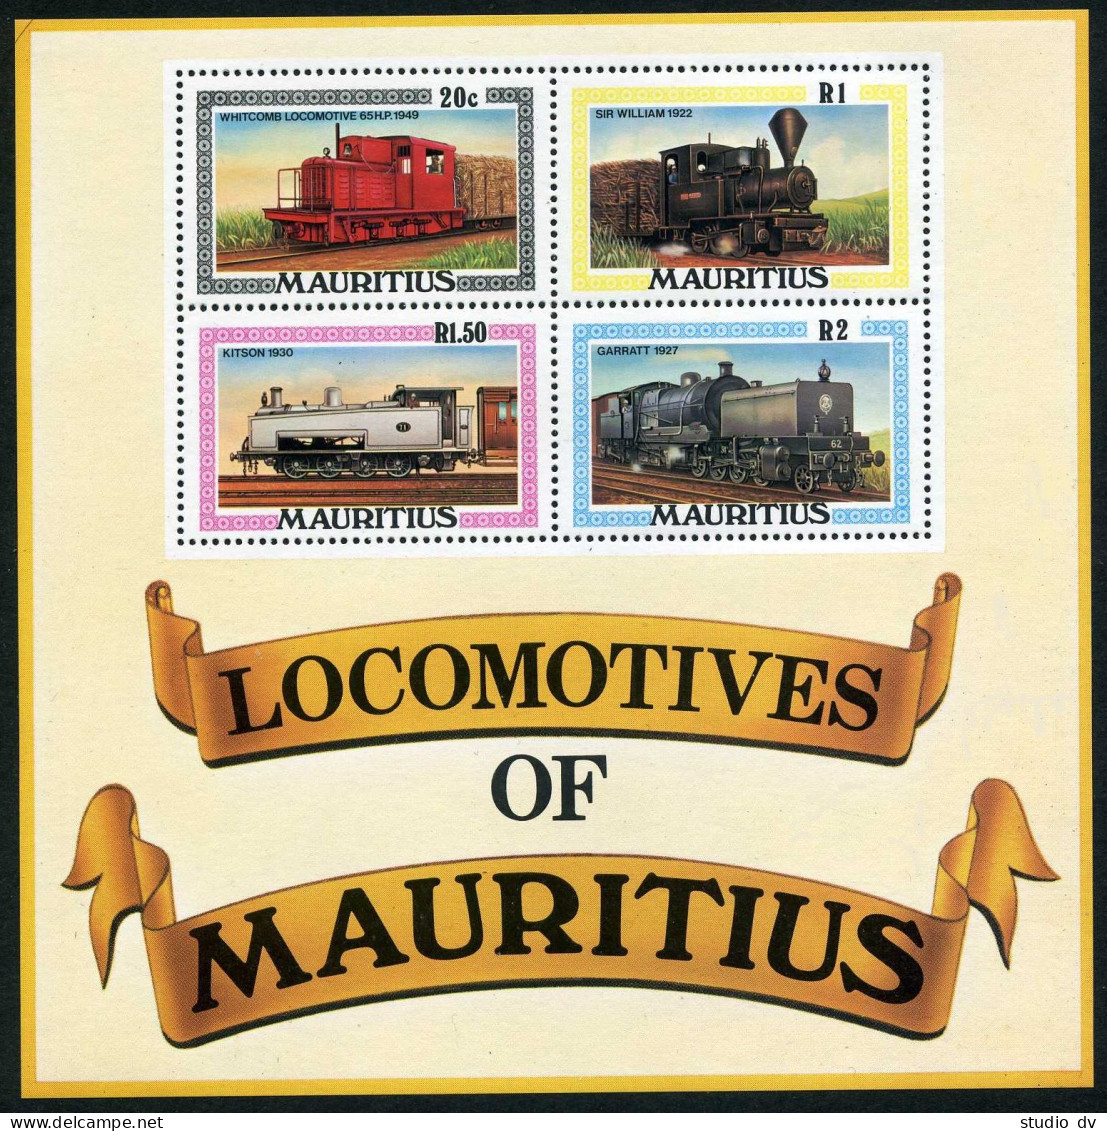 Mauritius 476-479, 479a Sheet, MNH. Michel 470-473, Bl.9. Locomotives 1979. - Maurice (1968-...)